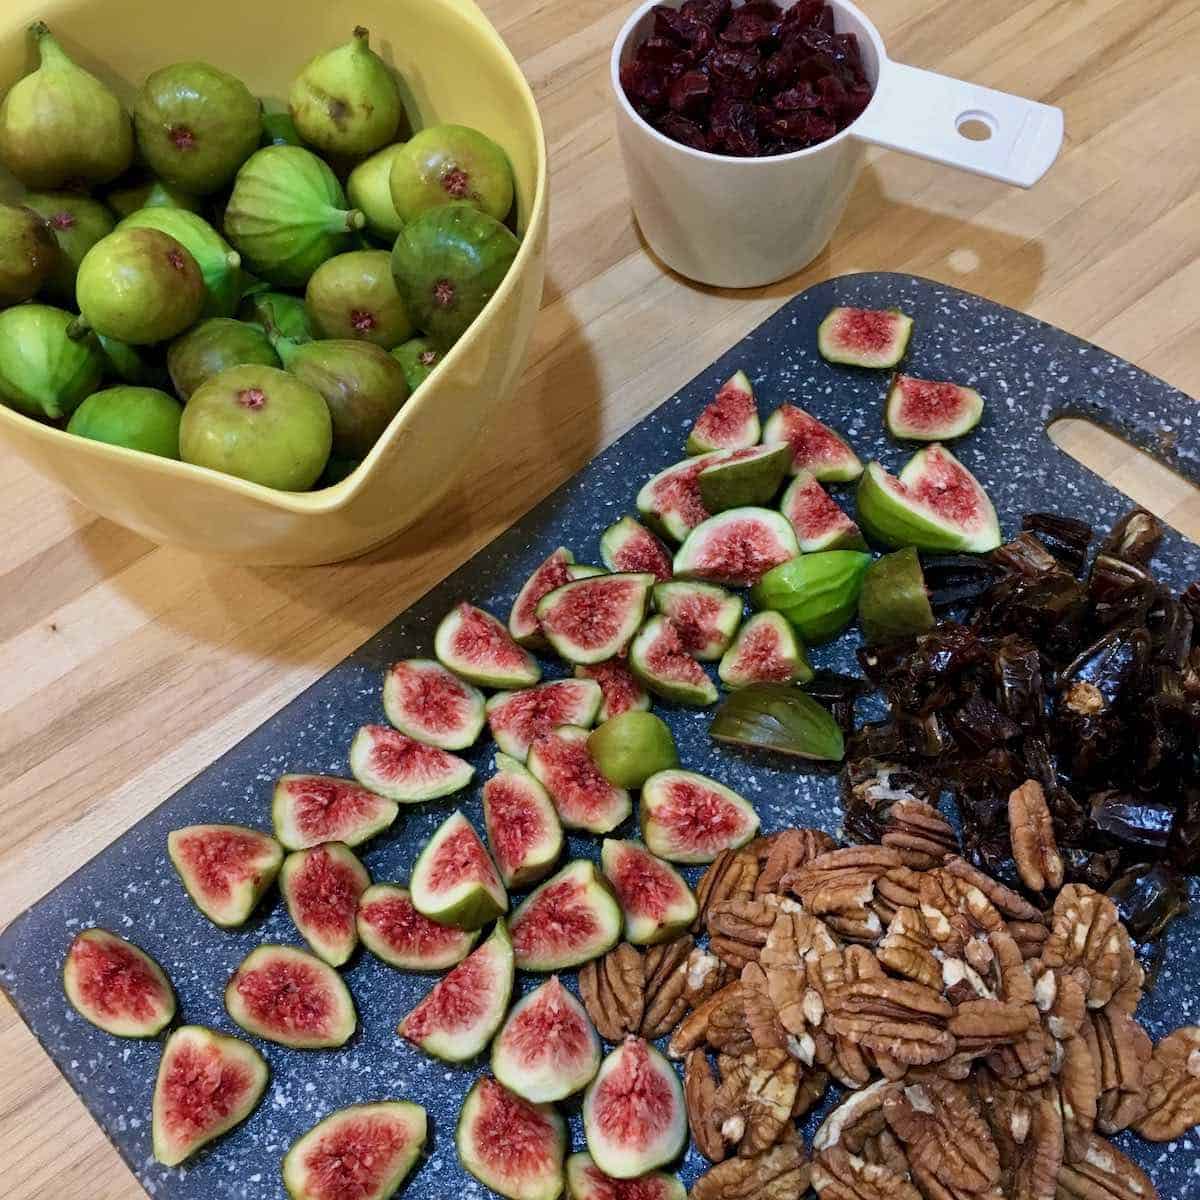 Figs, dates, pecans.